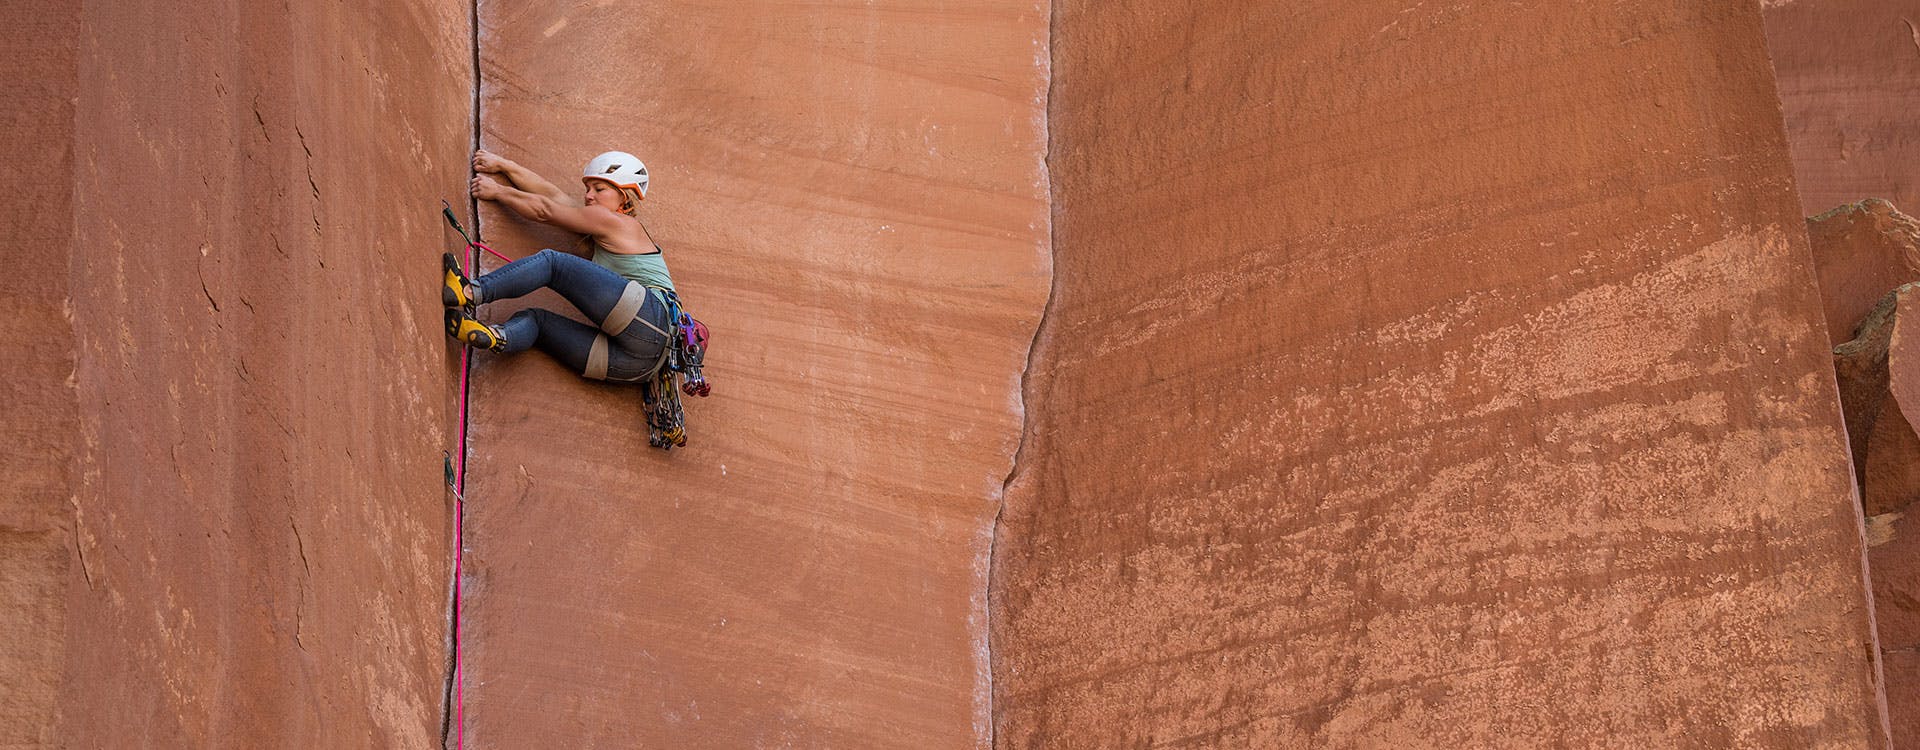 climber working her way up a crack